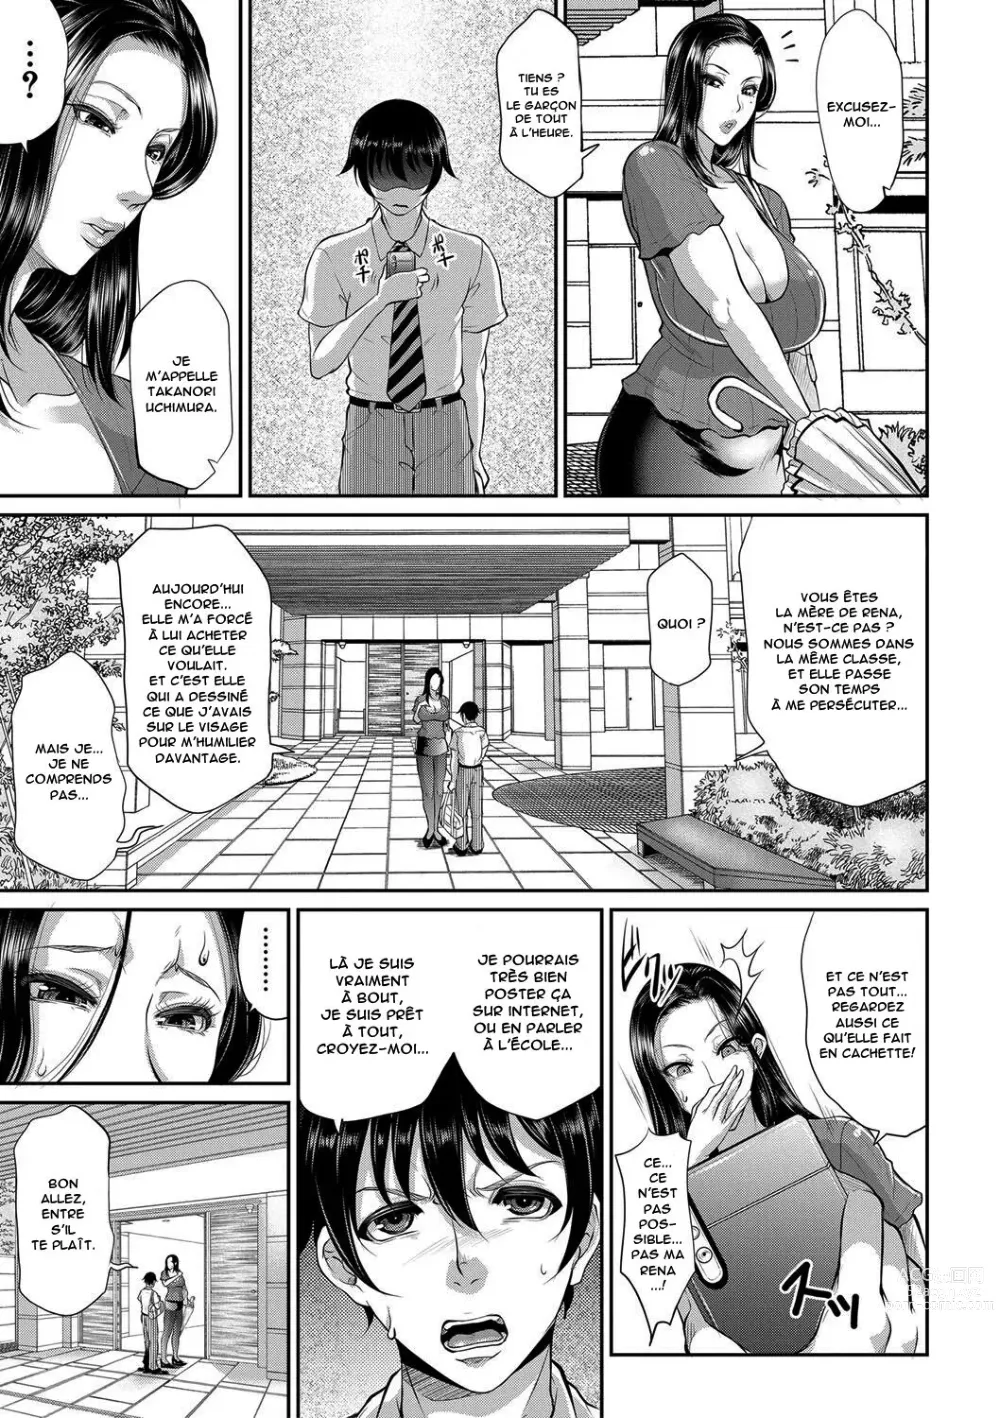 Page 7 of manga Ijimecco